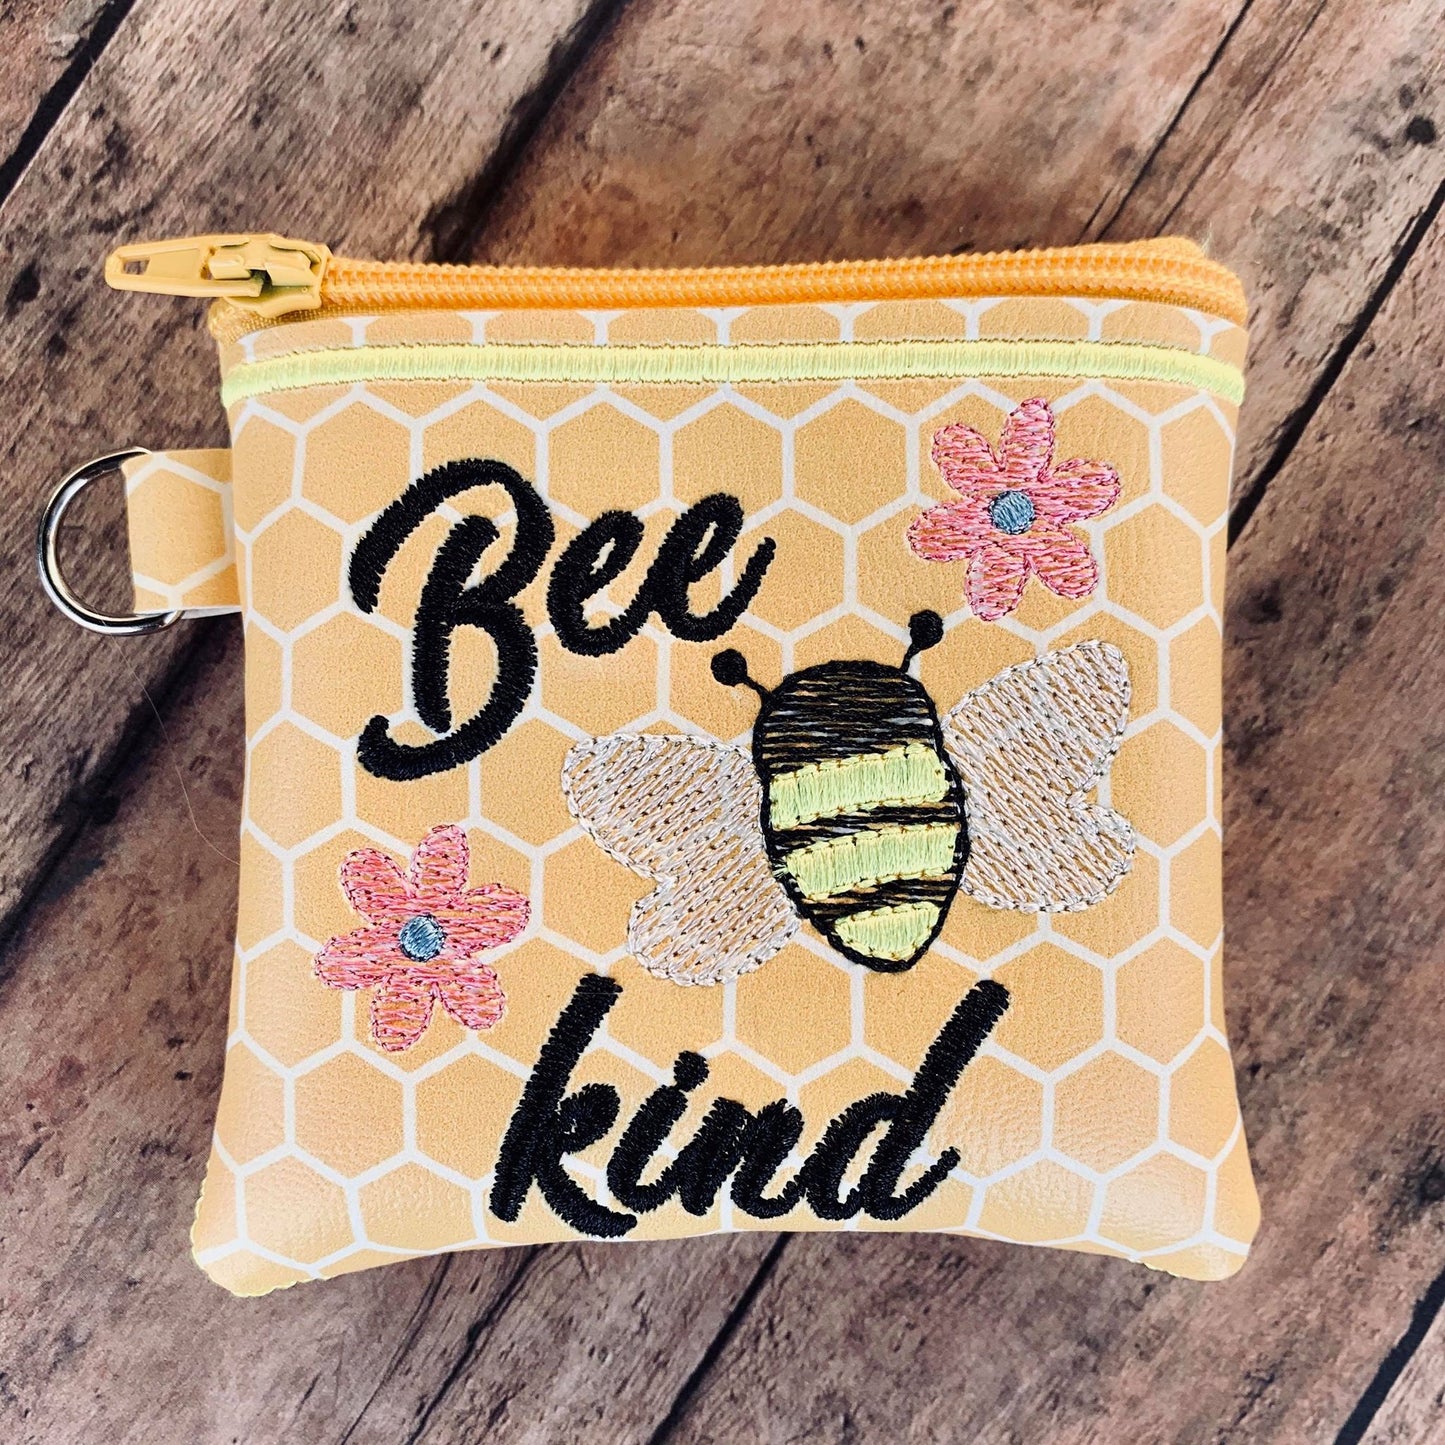 Bee Kind Zipper Bag - 2 sizes - Digital Embroidery Design